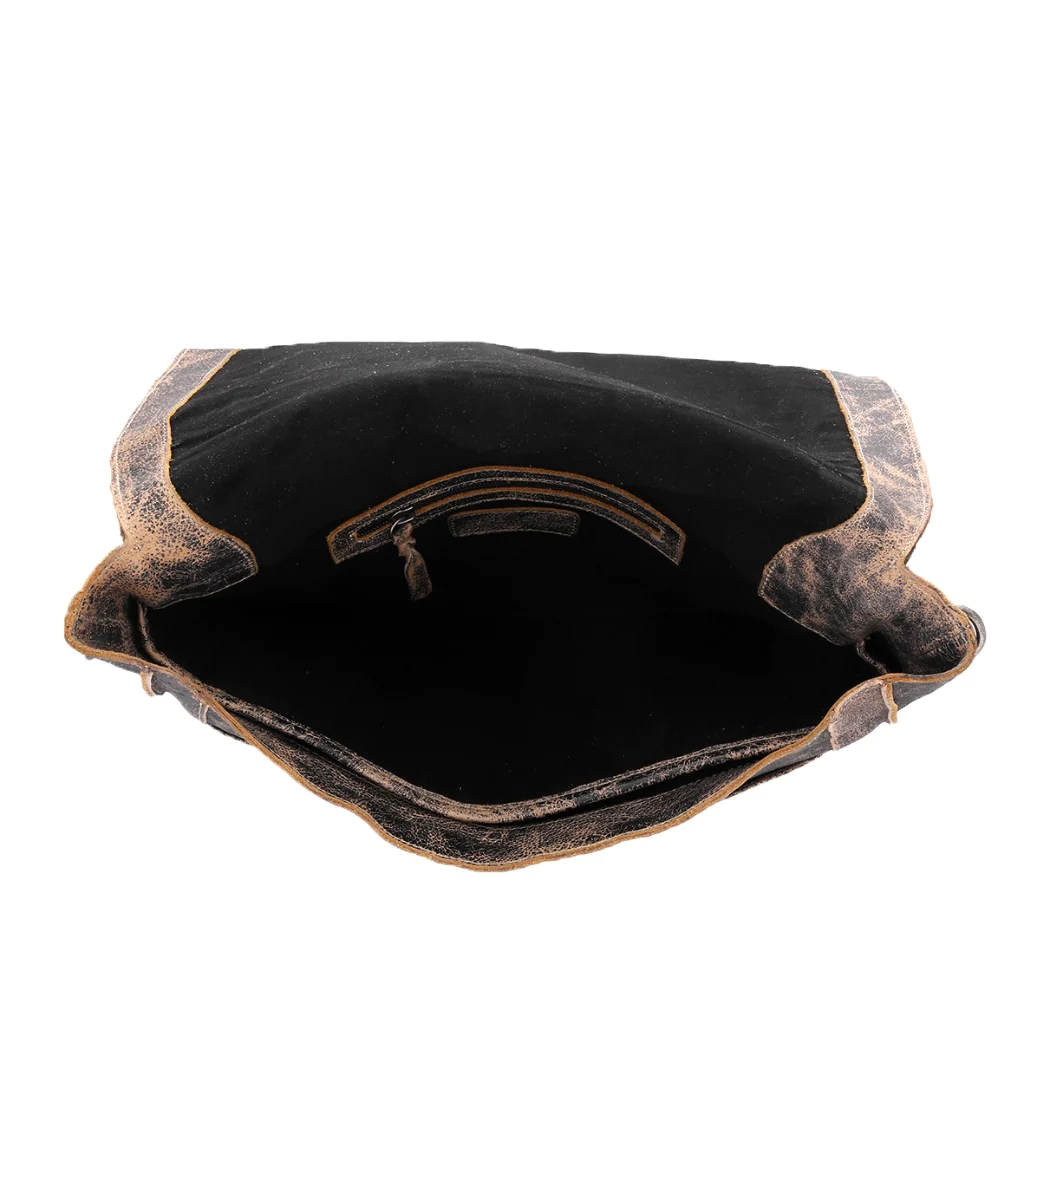 Bed Stu Hampton II Handbag in Black Lux - SpiritedBoutiques Boho Hippie Boutique Style Hand Bag, Bed Stu